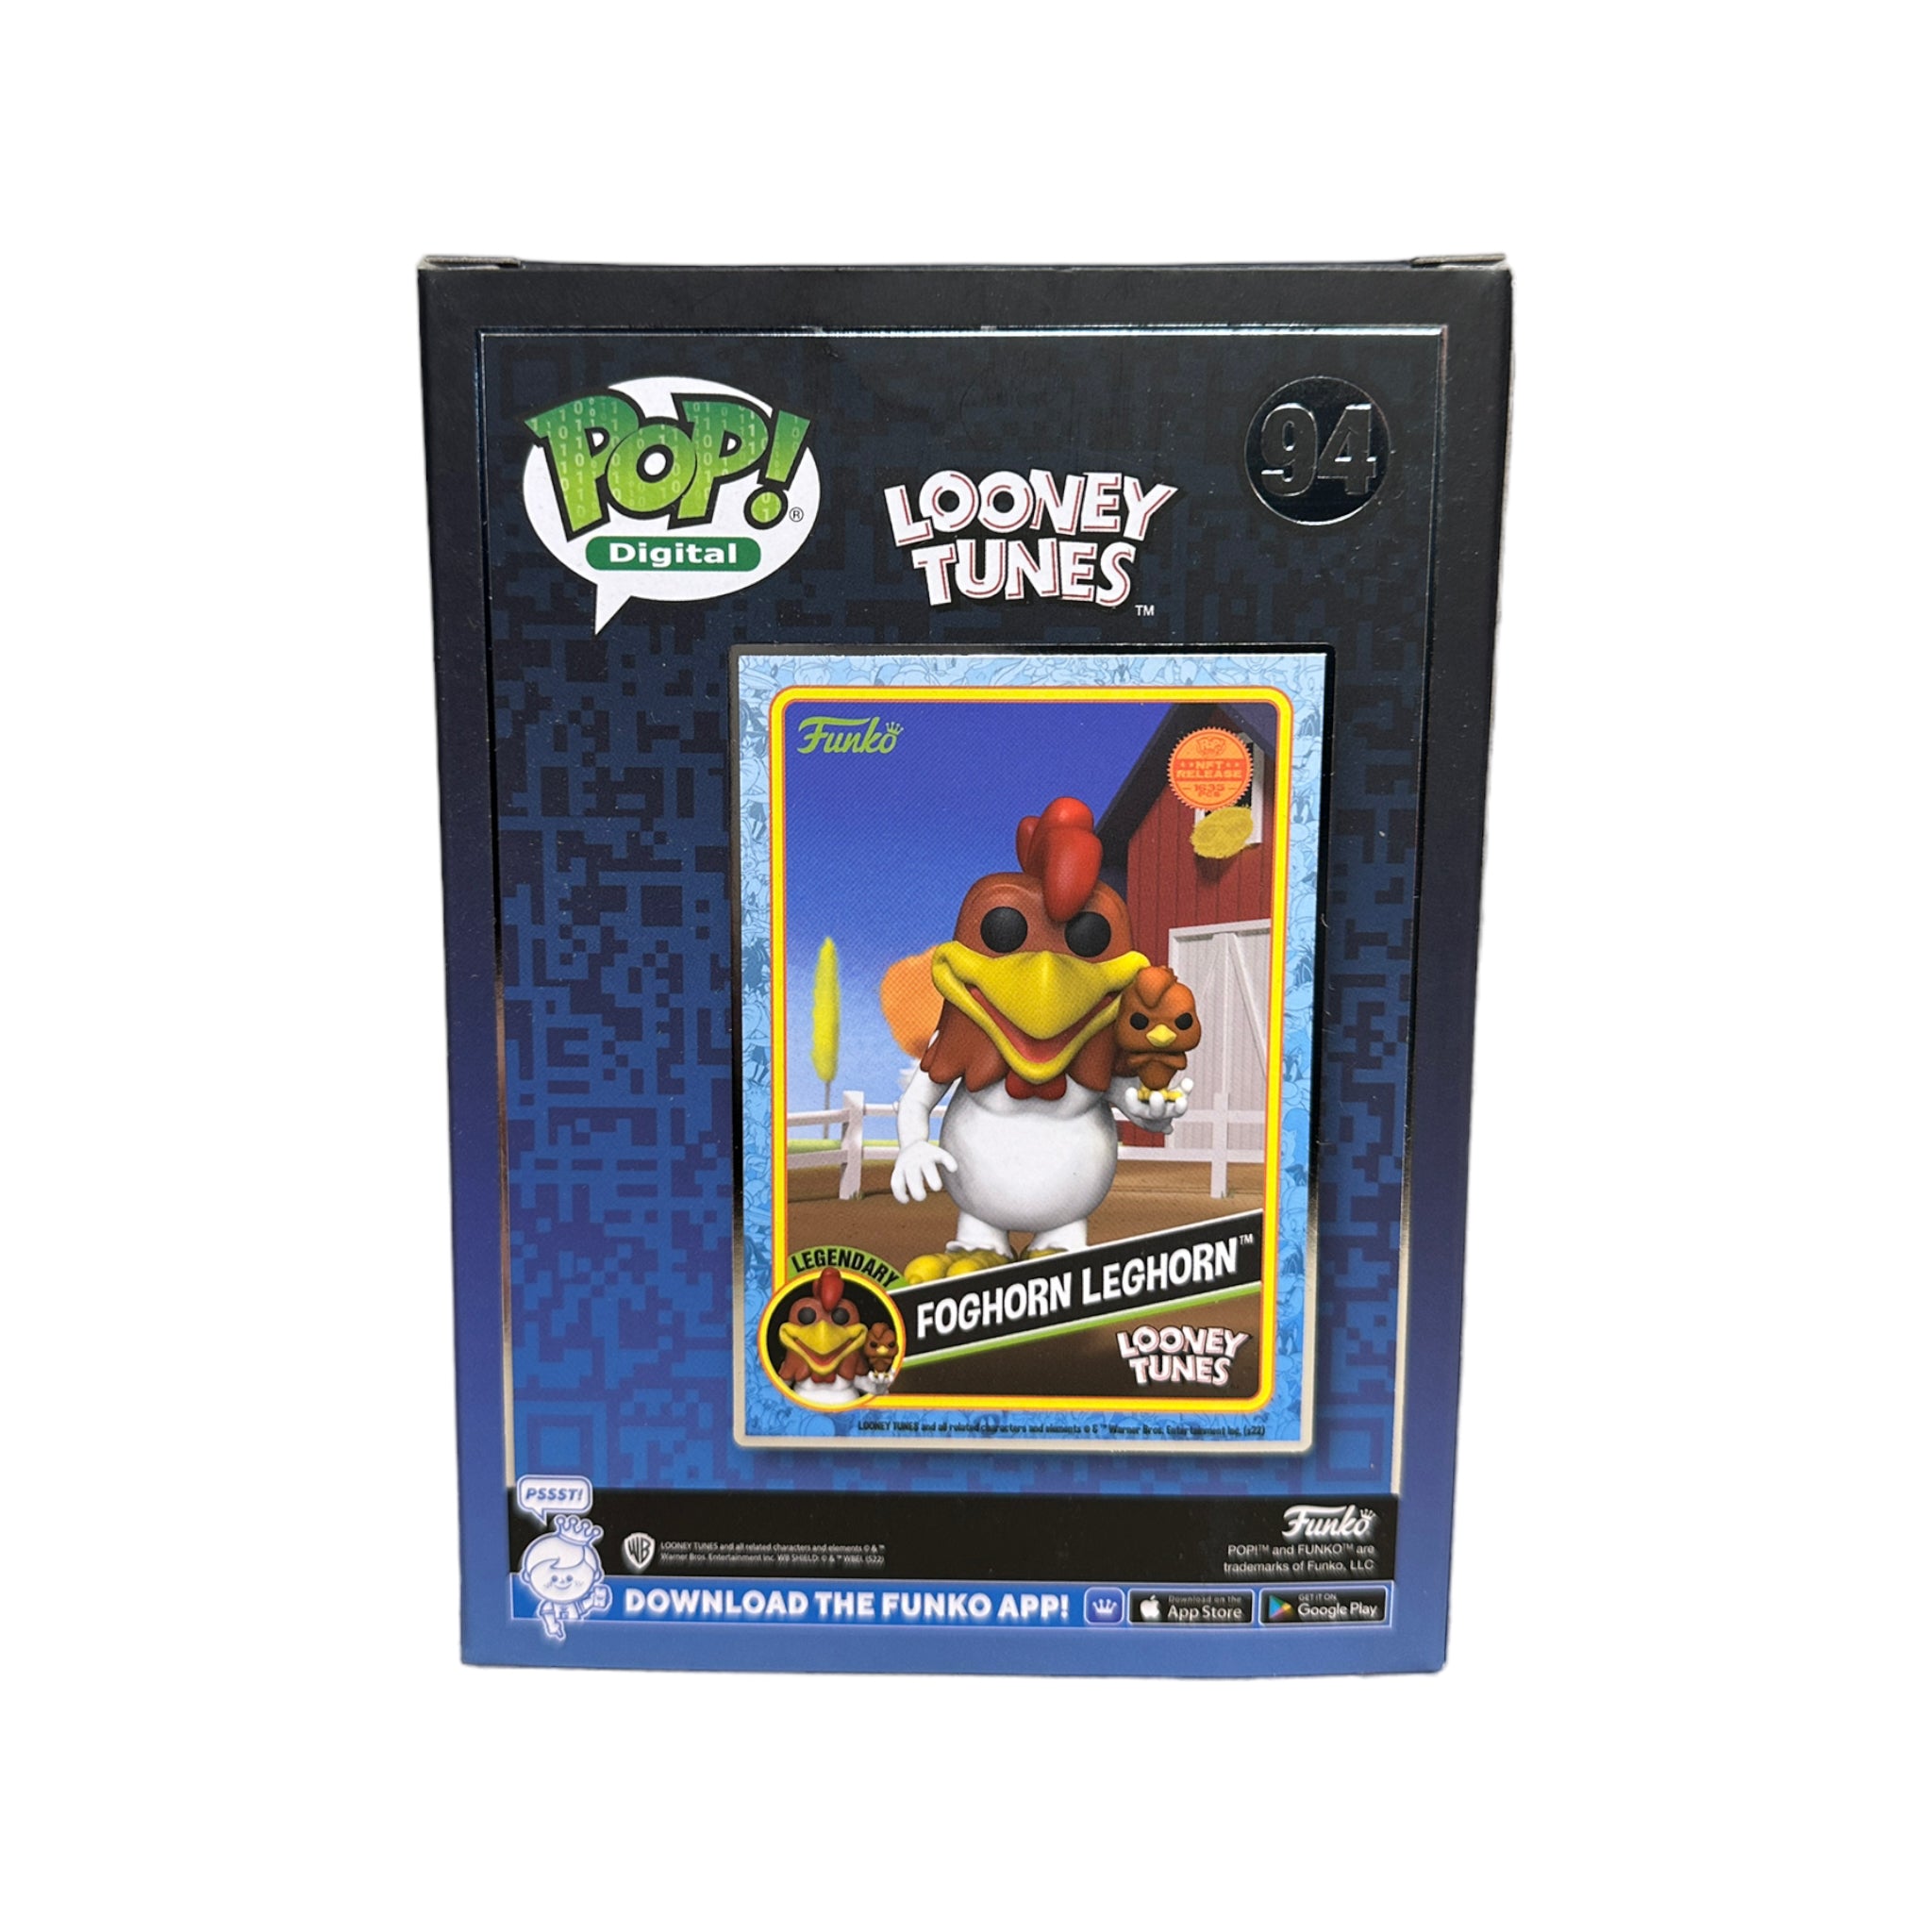 Foghorn Leghorn #94 Funko Pop! - Looney Tunes - NFT Release Exclusive LE1635 Pcs - Condition 9/10